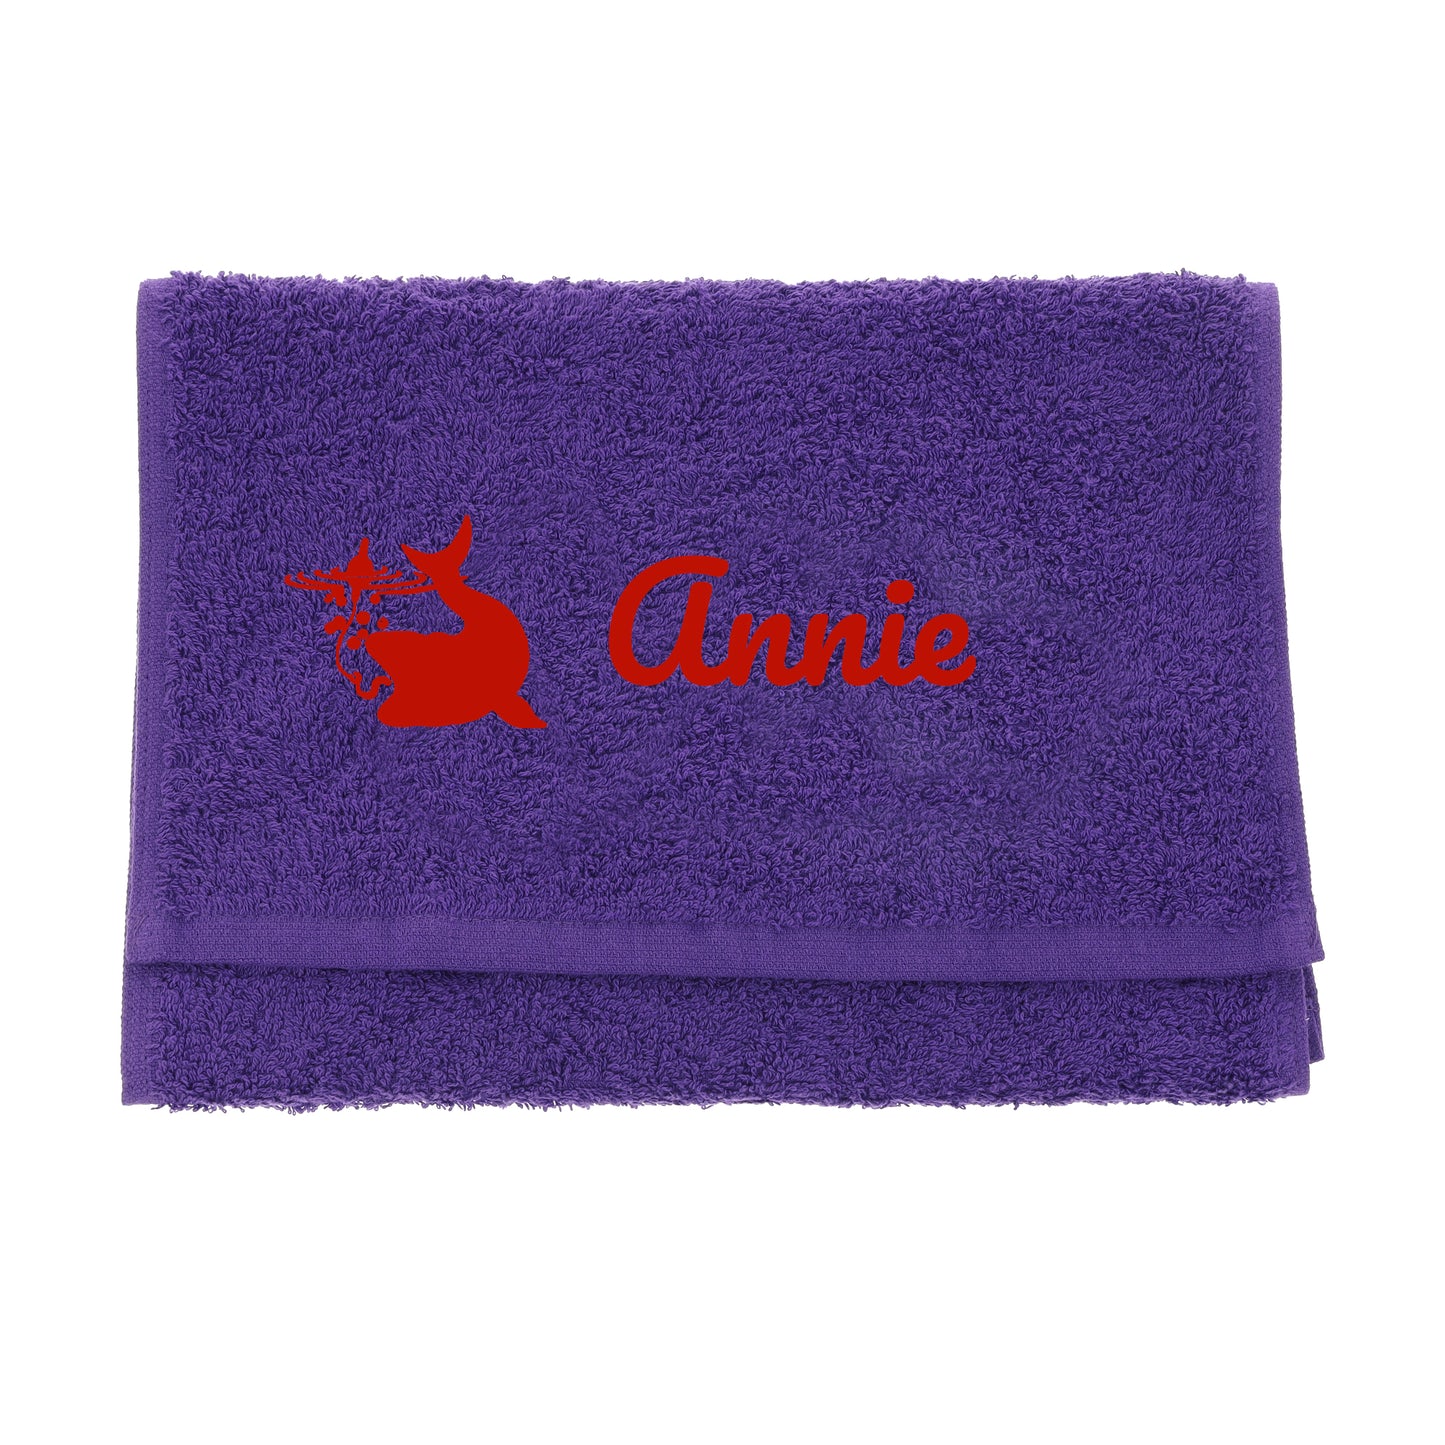 Personalised Embroidered Fishing Towel  - Always Looking Good - Purple  